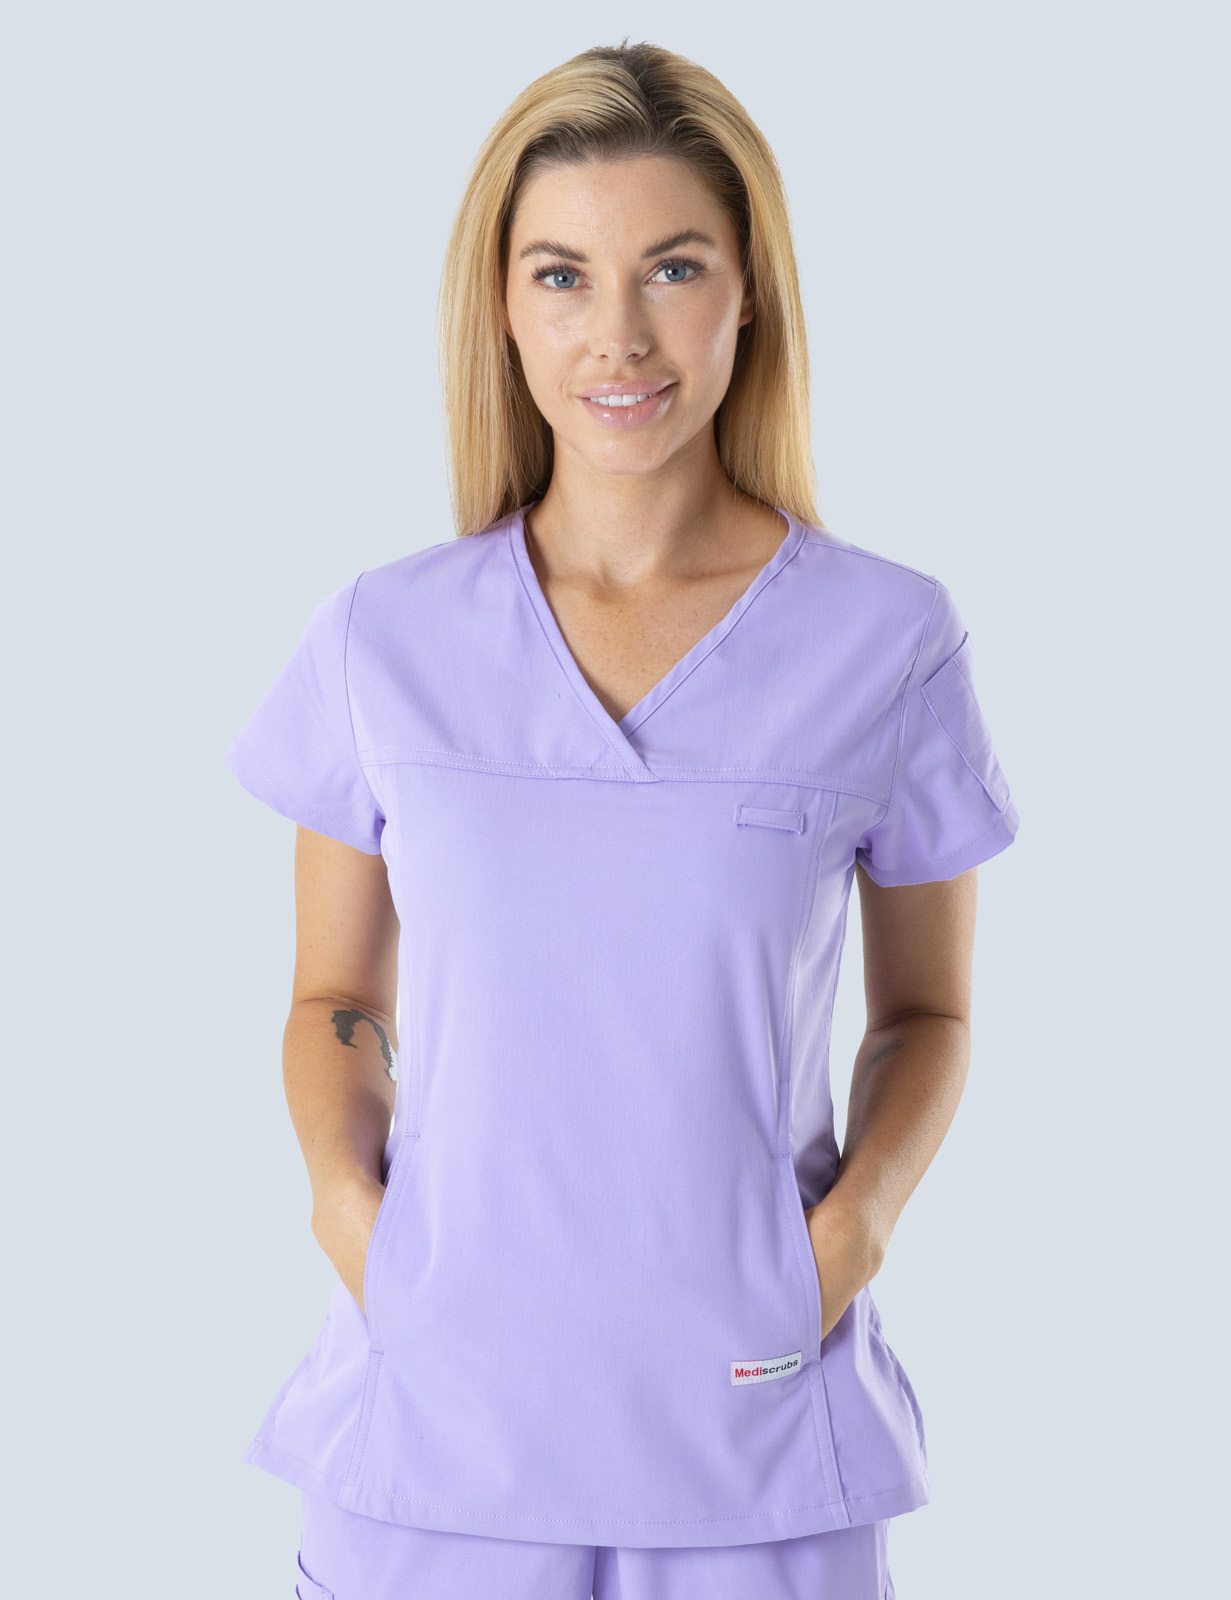 Queensland Children's Hospital Emergency Department Clinical Facilitator Uniform Top Bundle  (Women's Fit Top in Lilac incl Logos)